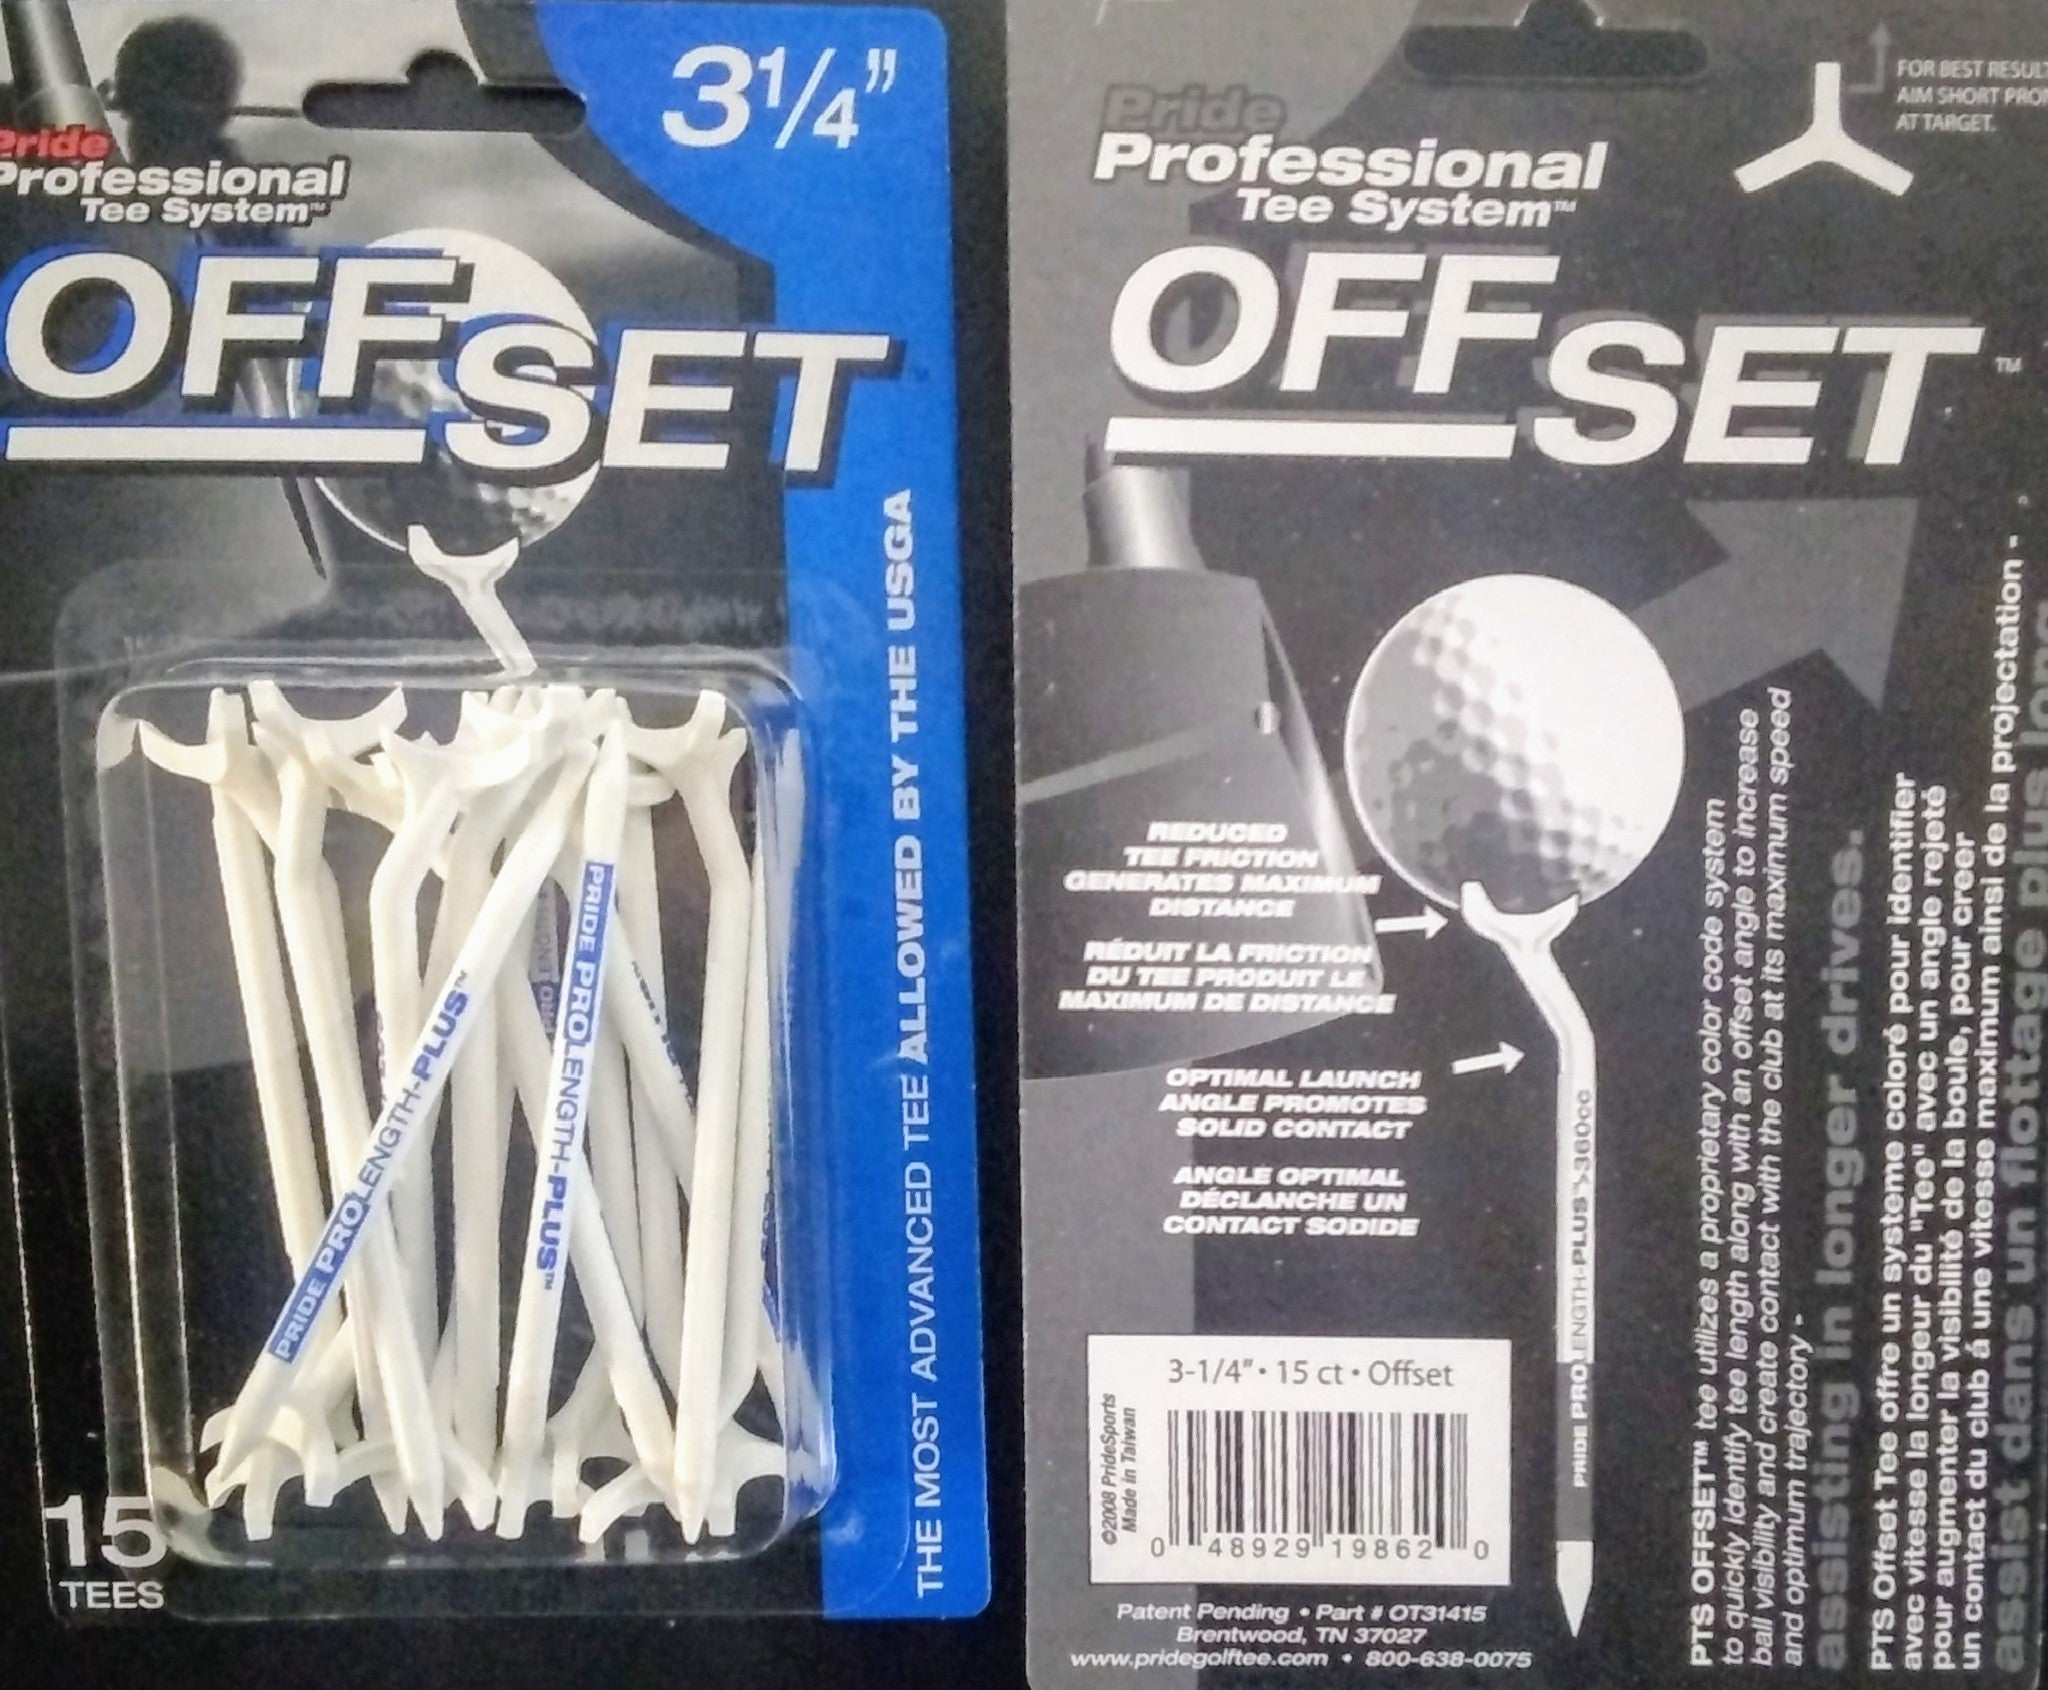 Pride OT31415 Professional Offset Golf Tees 3-1/4" 2 packs of 15pcs